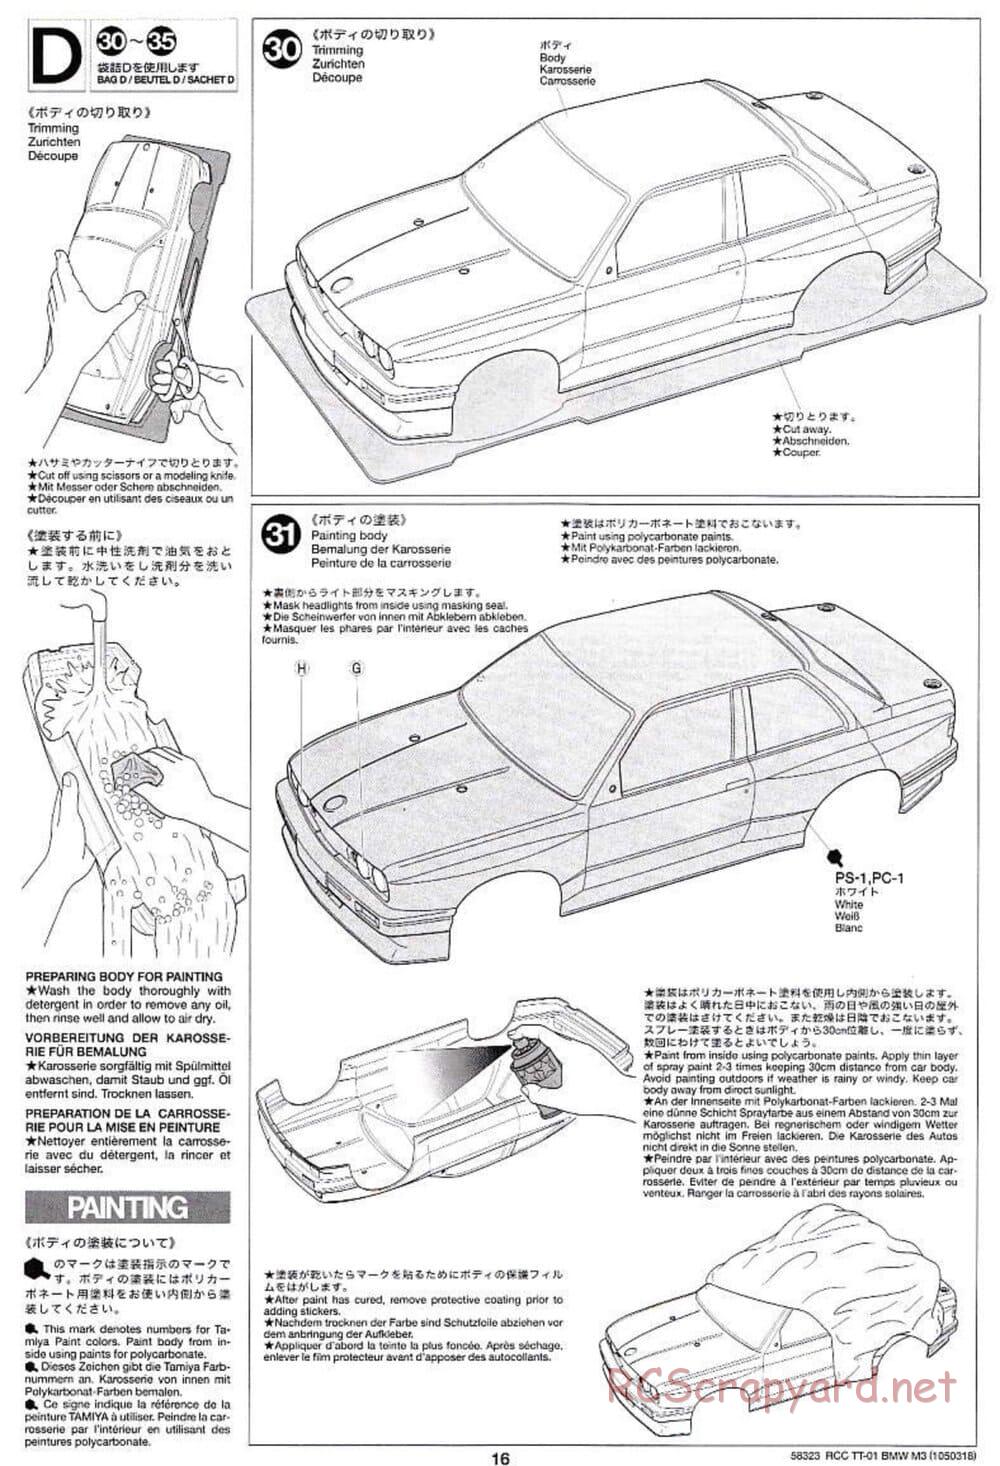 Tamiya - Schnitzer BMW M3 Sport Evo - TT-01 Chassis - Manual - Page 16